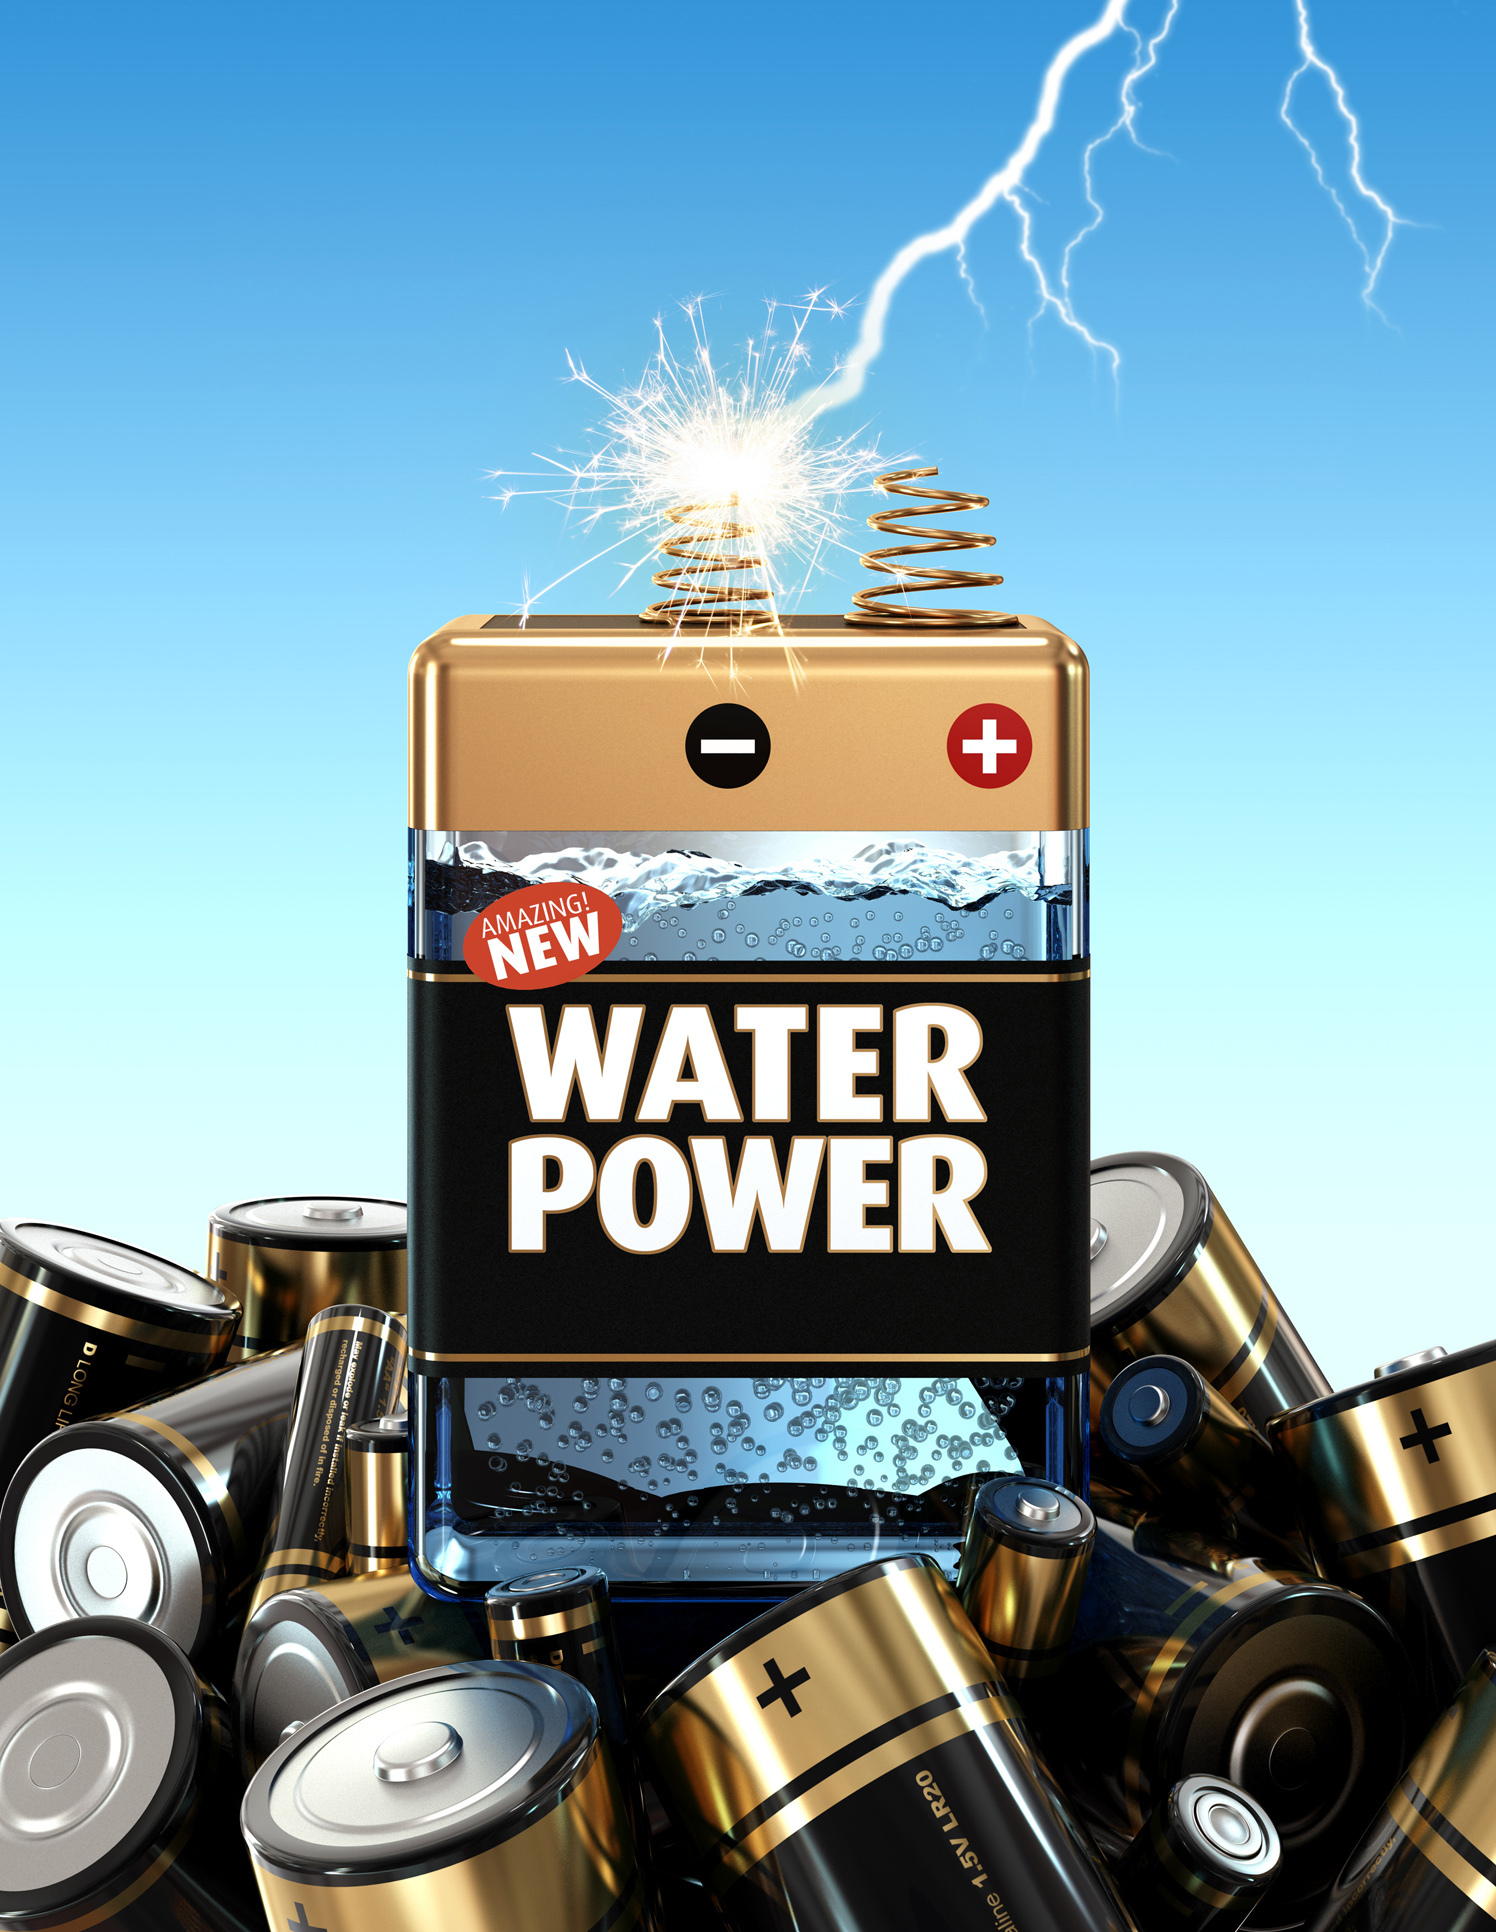 Water Power / Focus Magazine